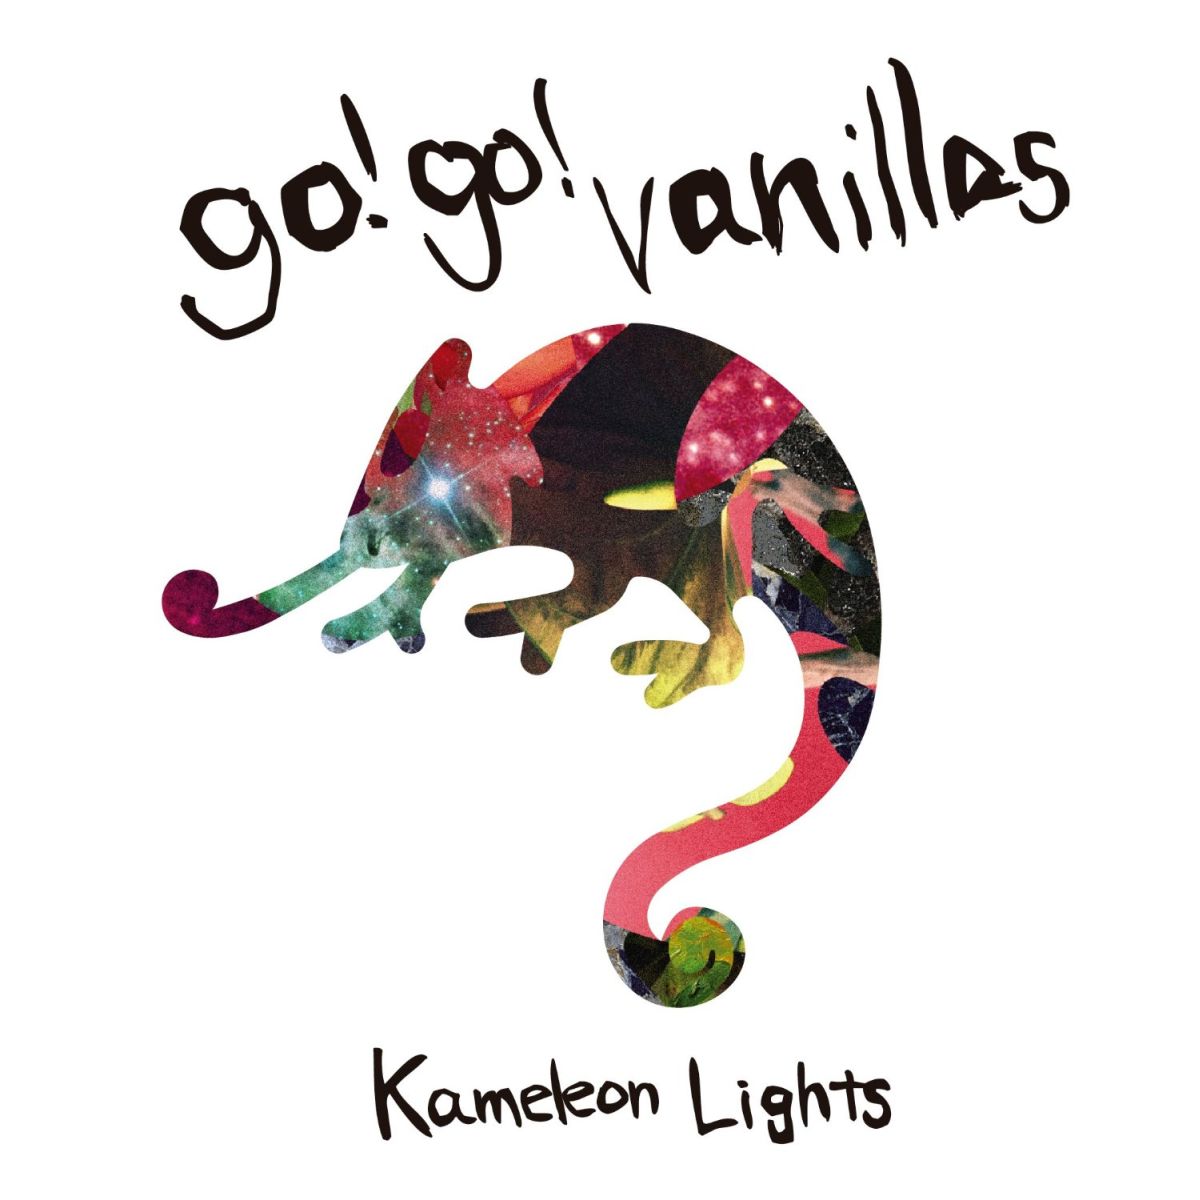 Kameleon Lights (初回限定盤 CD＋DVD) [ go!go!vanillas ]